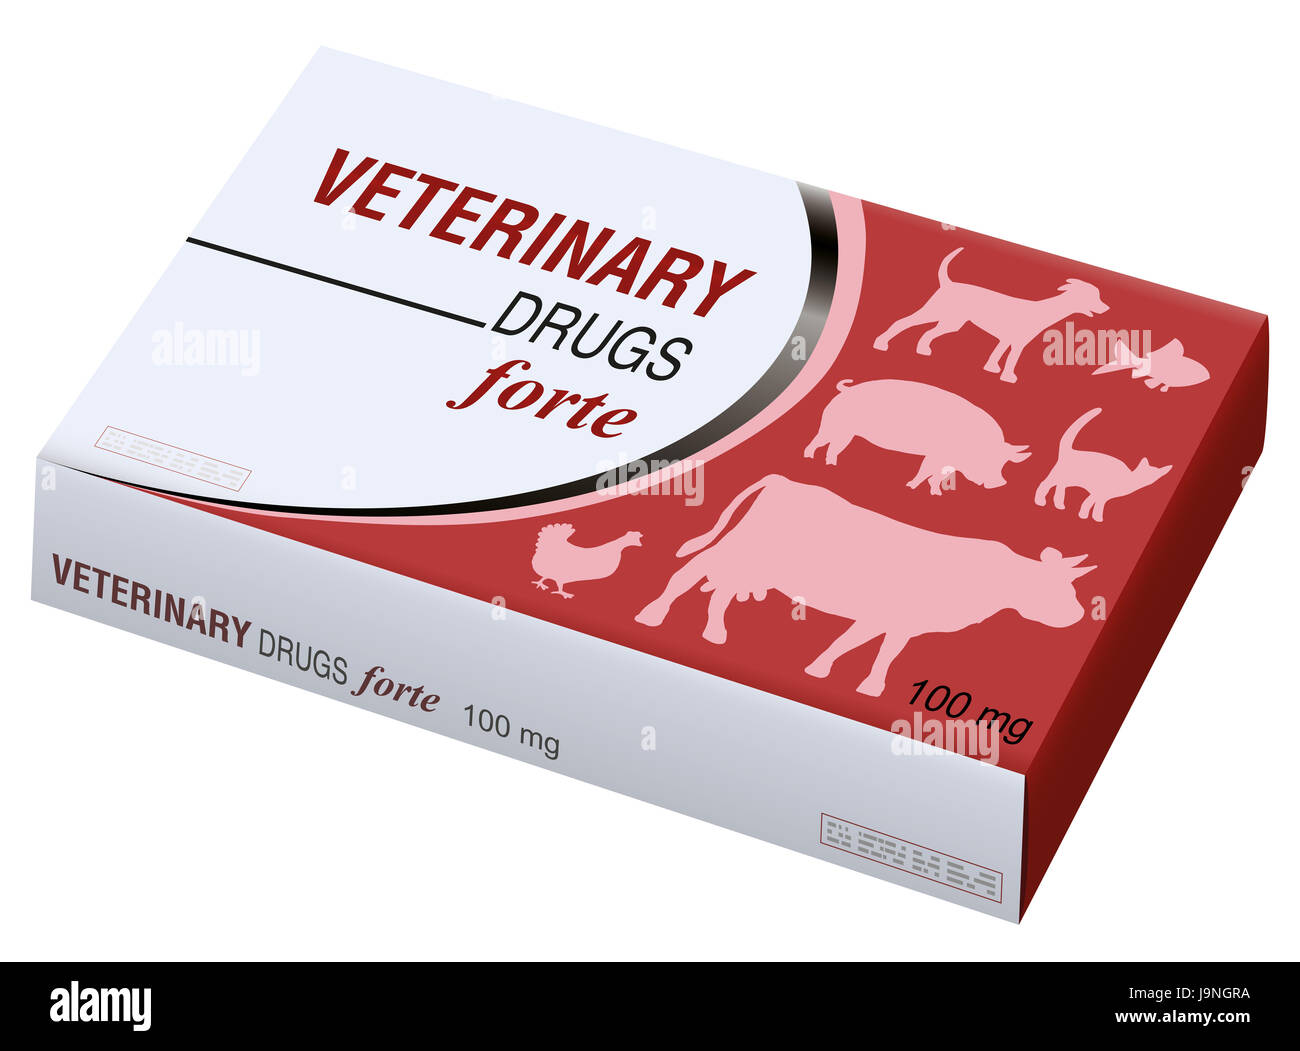 Veterinary drugs fake box - symbol for medical abuse of pets, animals, livestock.  Illustration on white background. Stock Photo